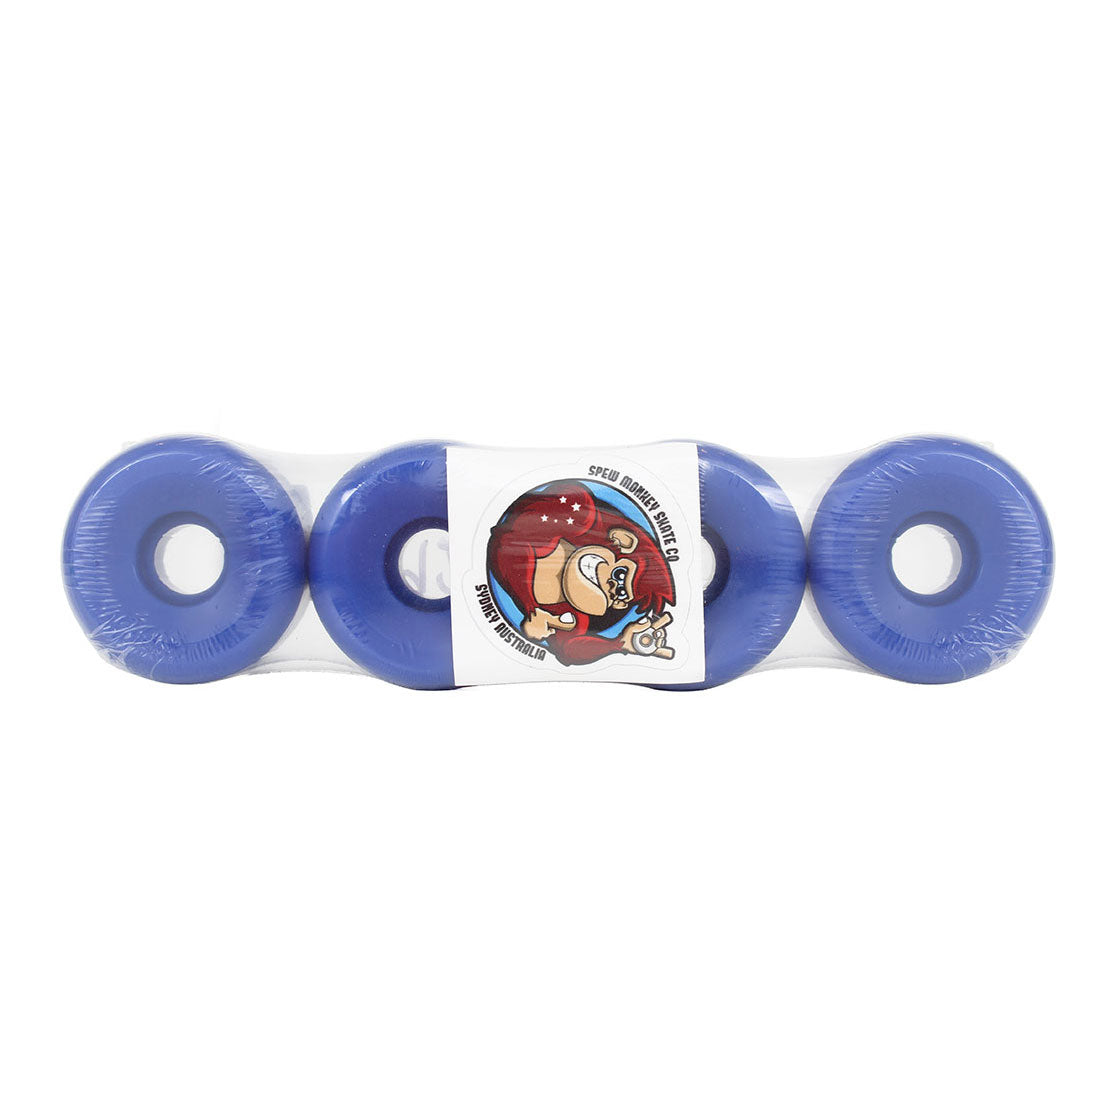 Spew Monkey Dragon Slayers 56mm 92a Wheels 4pk - Blue Skateboard Wheels